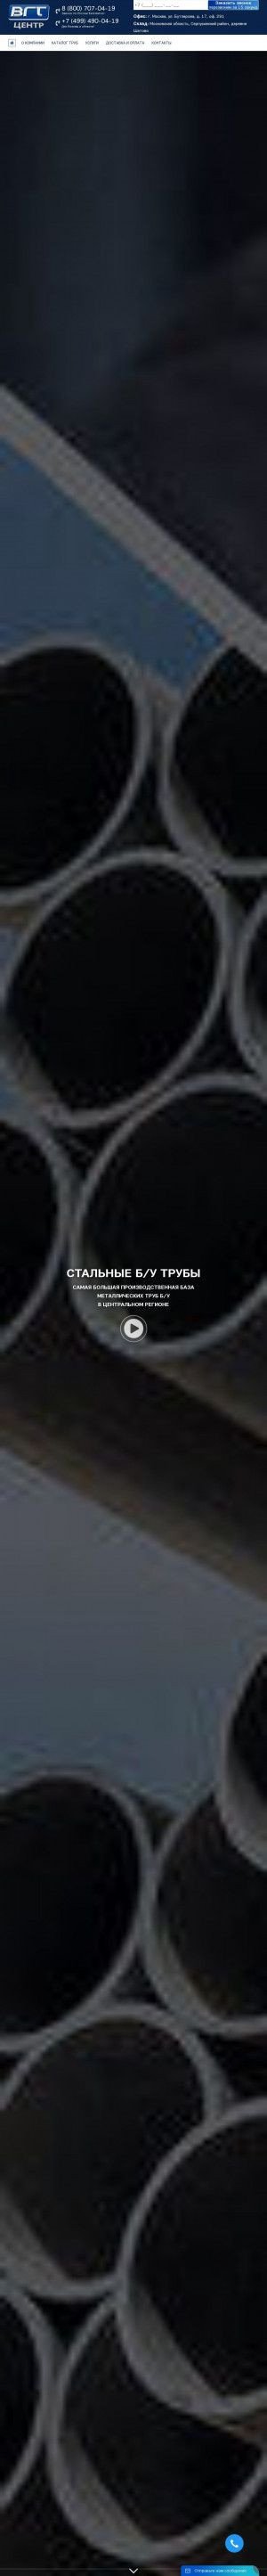 Предпросмотр для www.vgt-centr.ru — ВГТ-центр